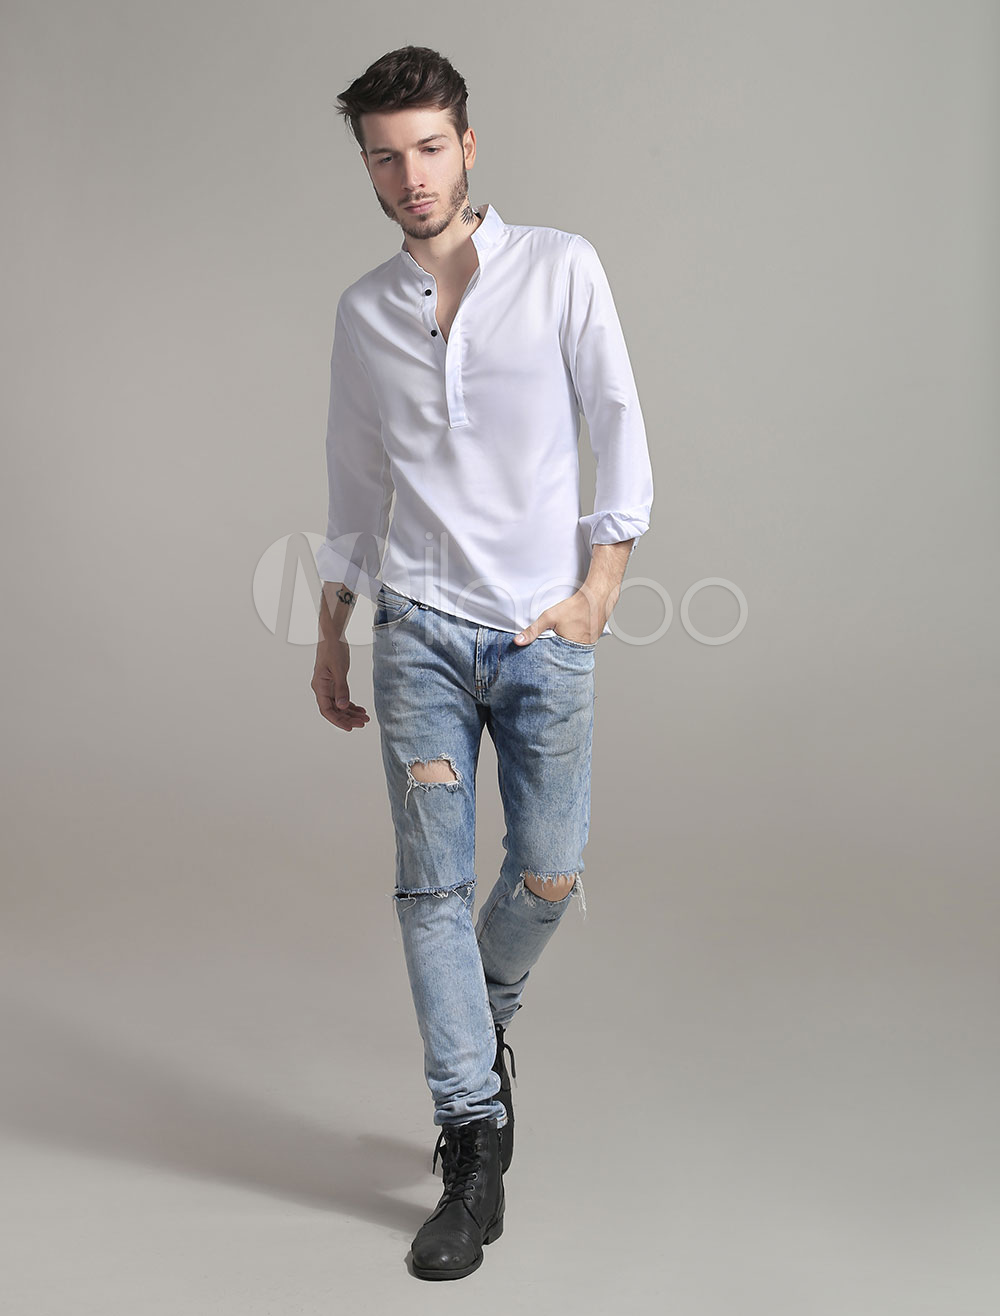 White Men T Shirt High Collar Button Irregular Cotton Top (Men\\'s Clothing Casual Shirts) photo